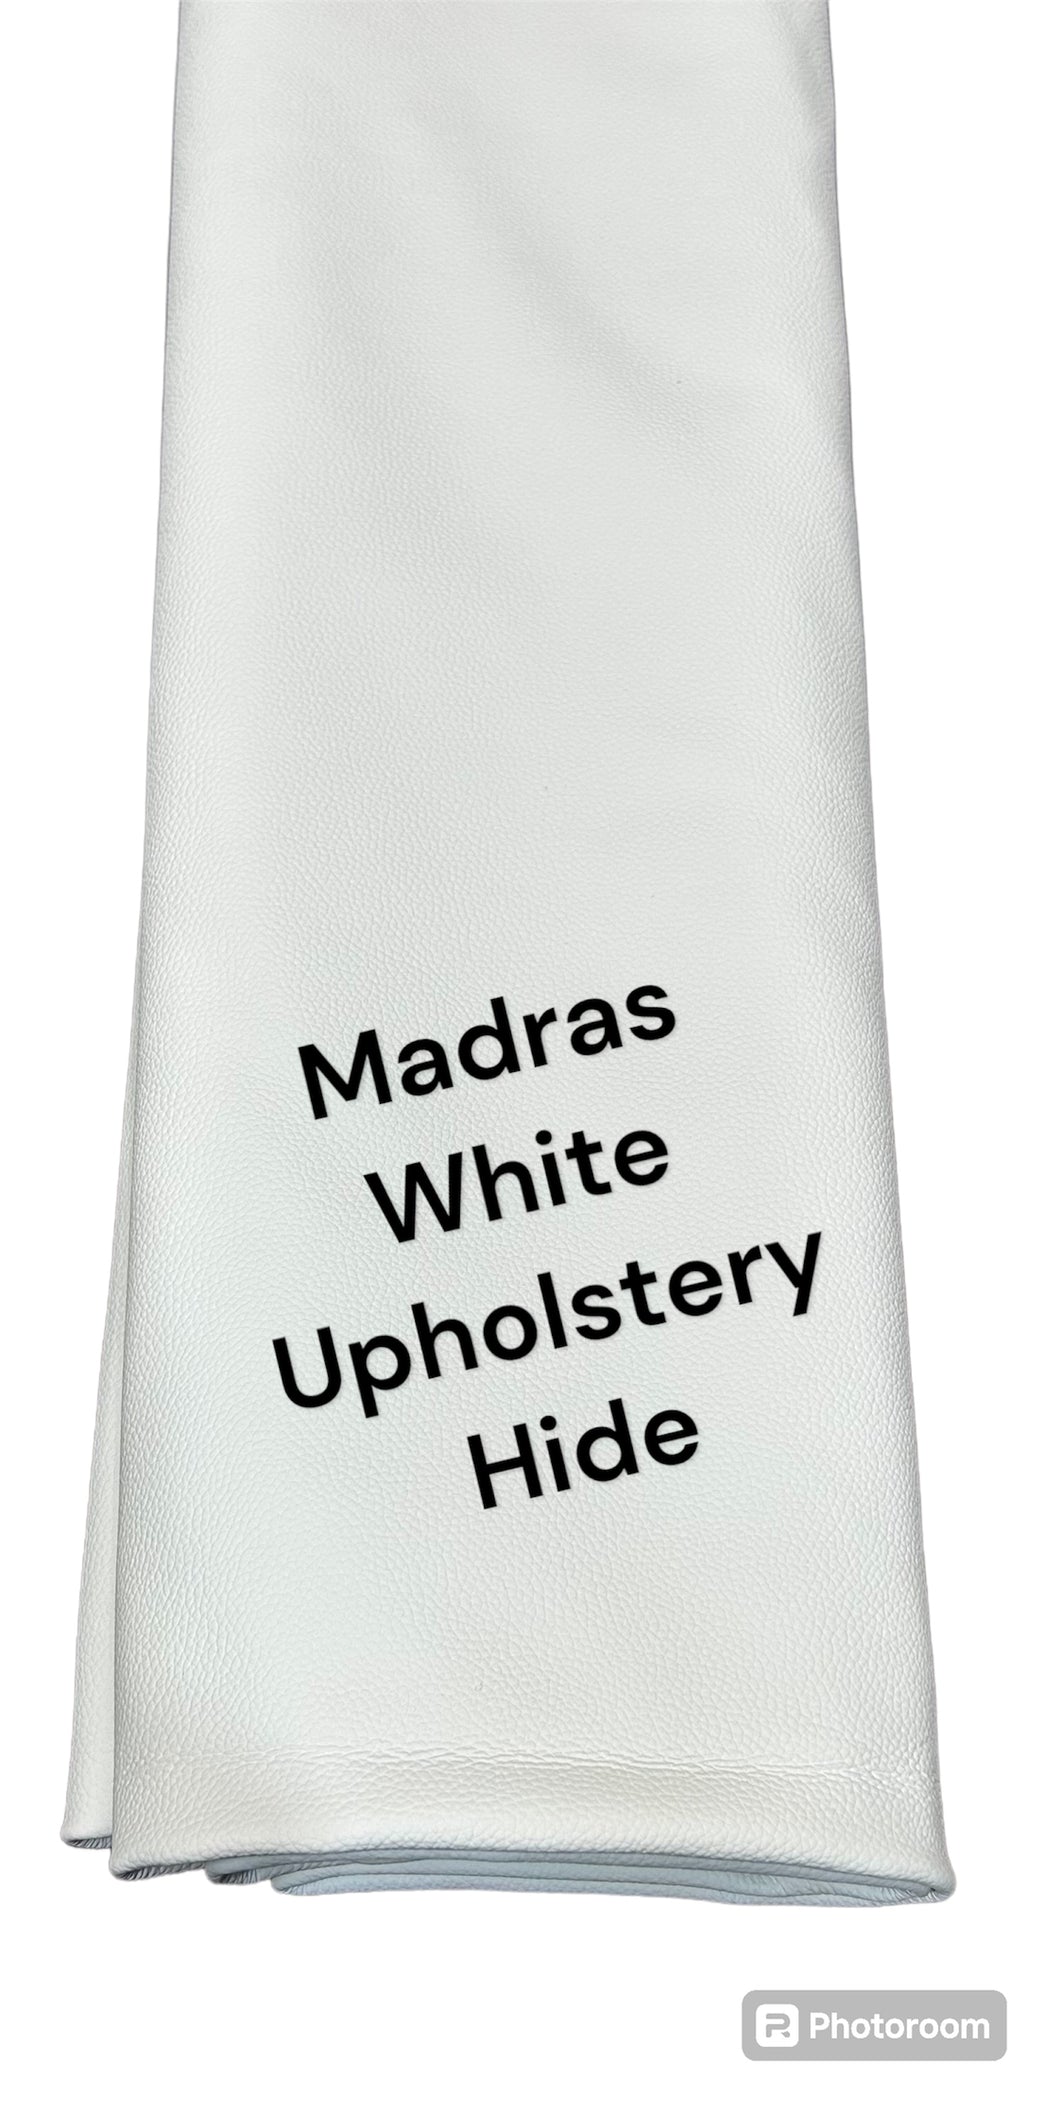 Madras white upholstery hide